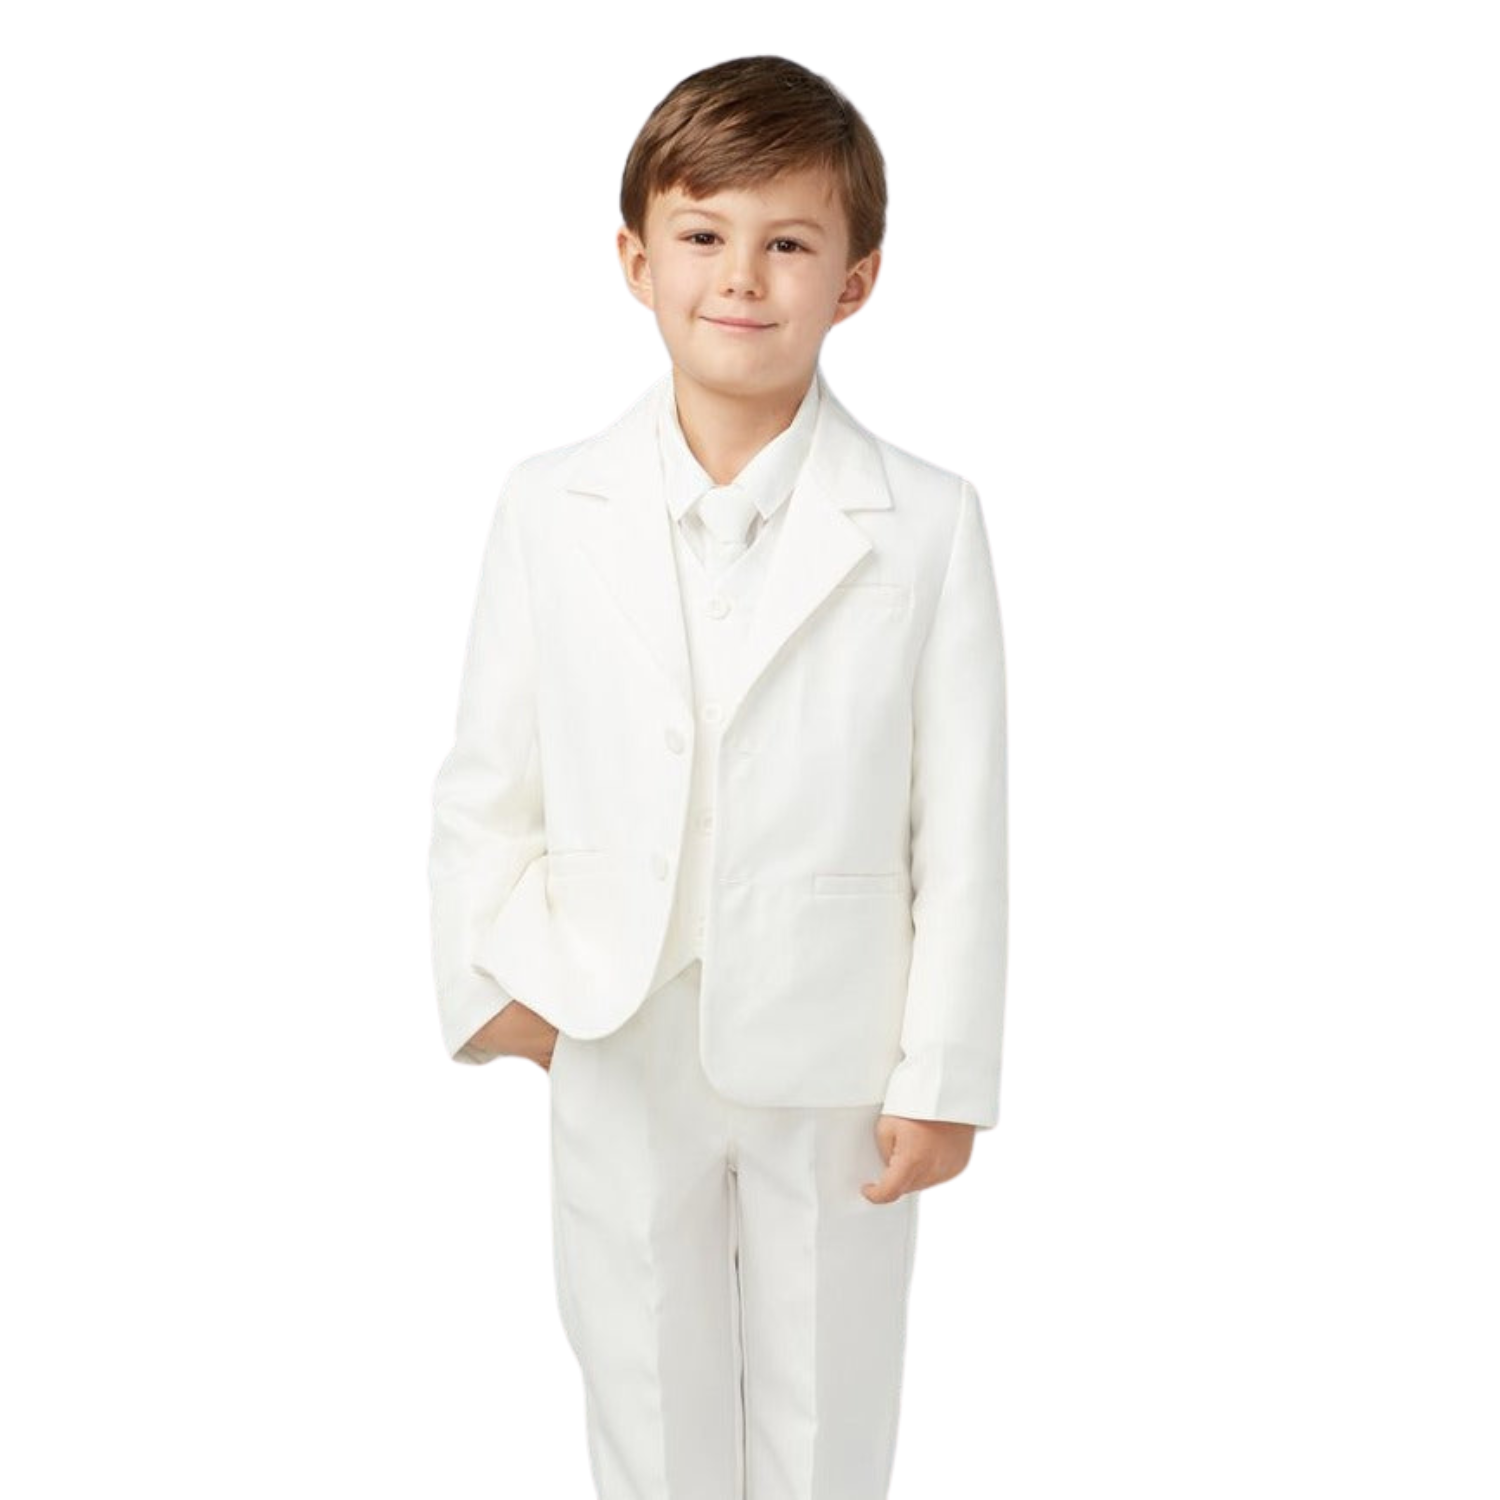 The White Suit Formal Boys Suit